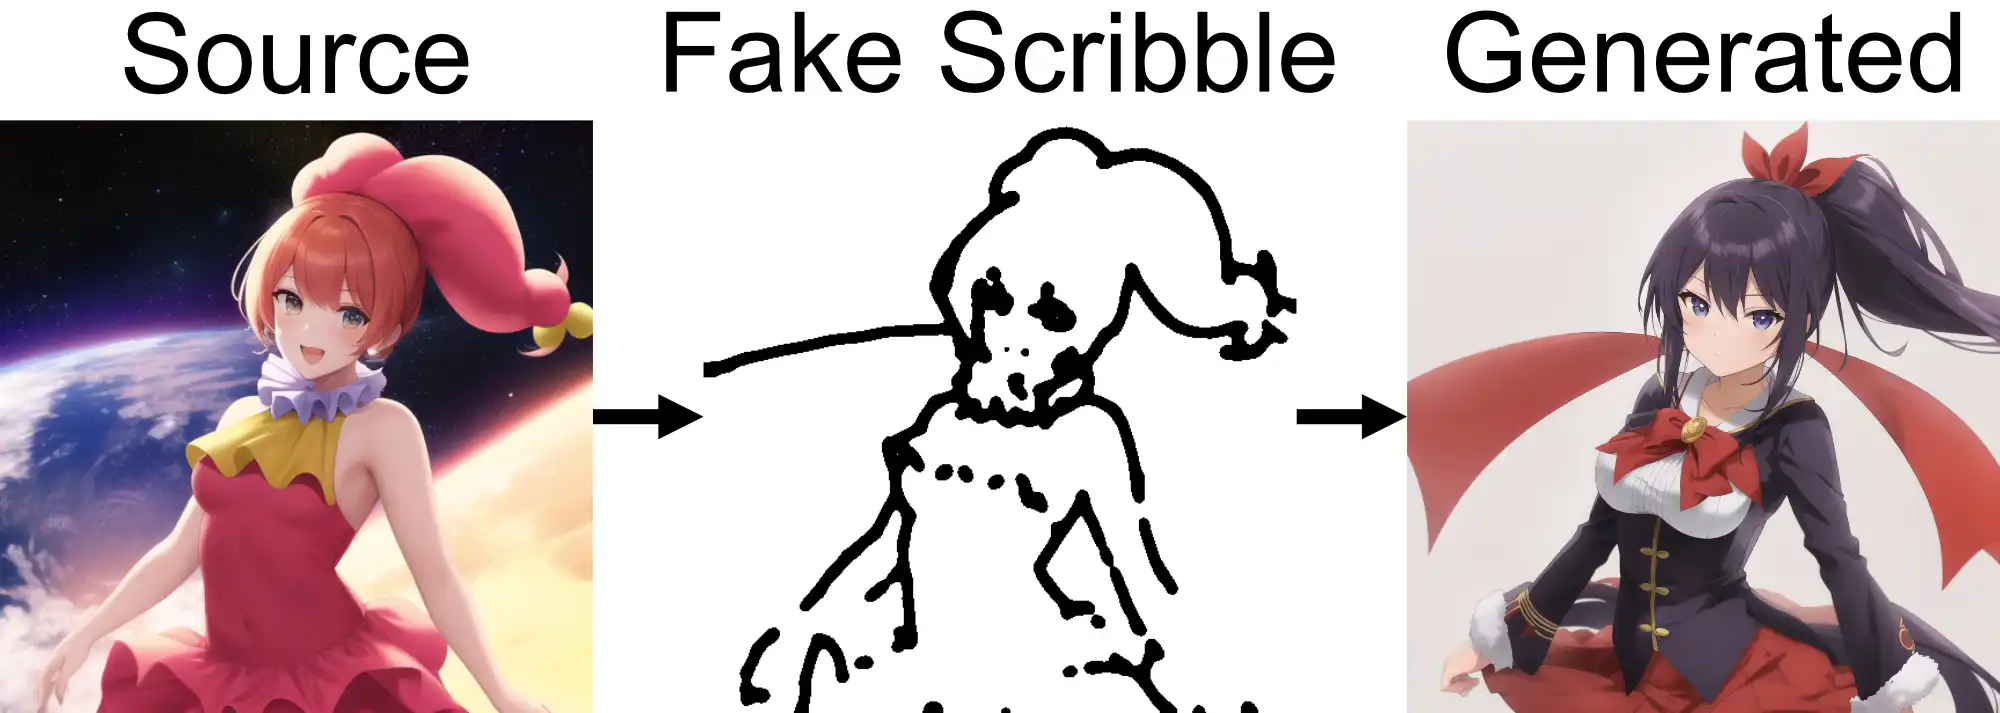 Fake Scribble model